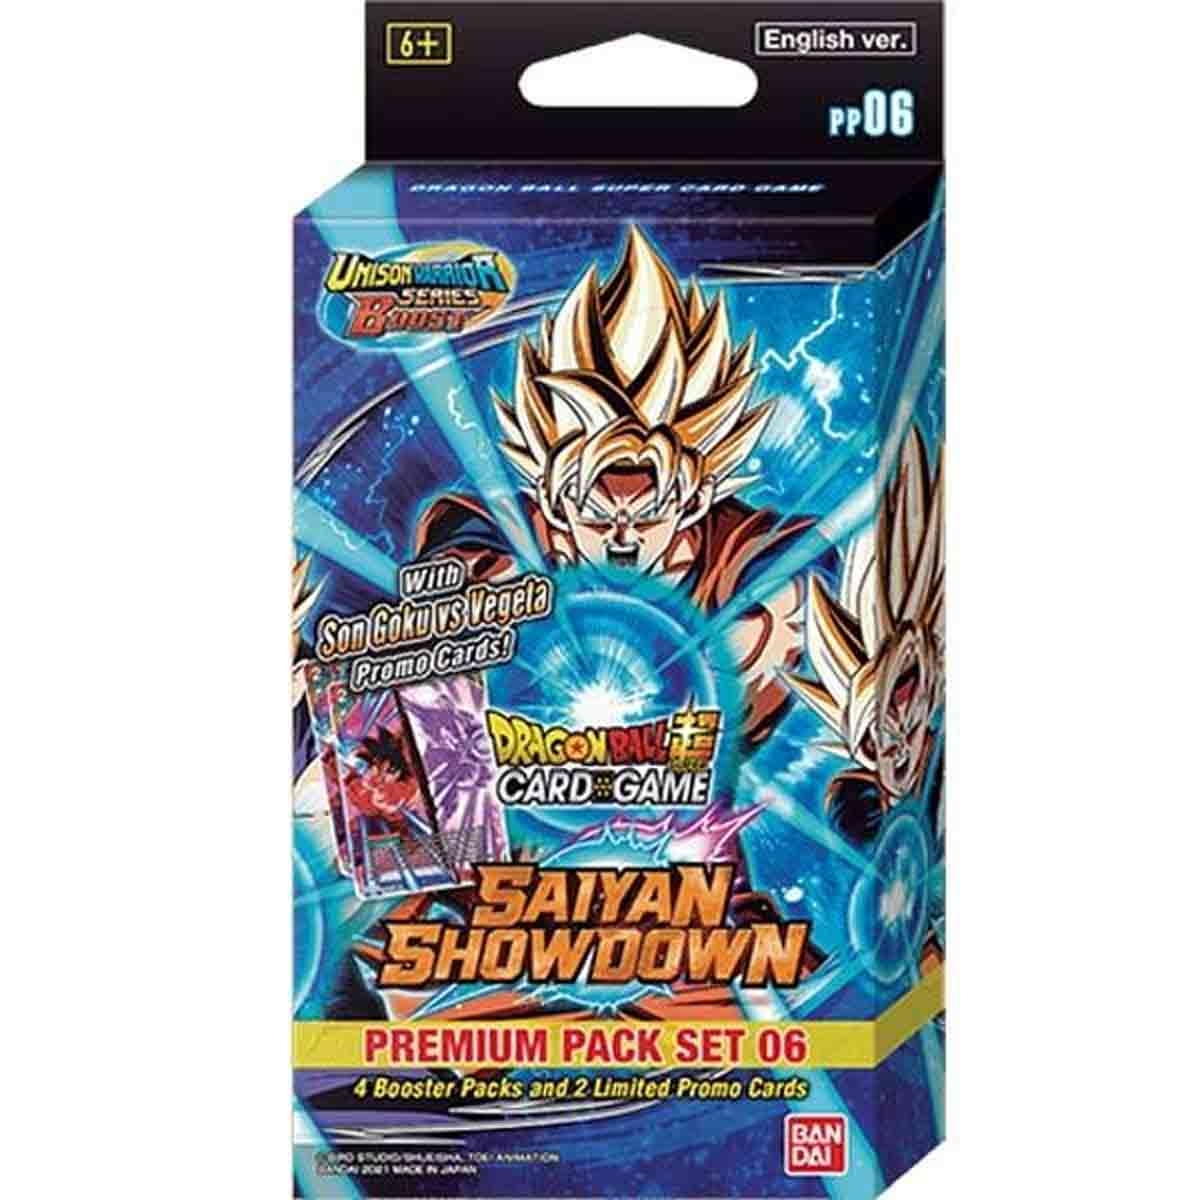 Premium Pack Set 06 – Dragon Ball Super Card Game